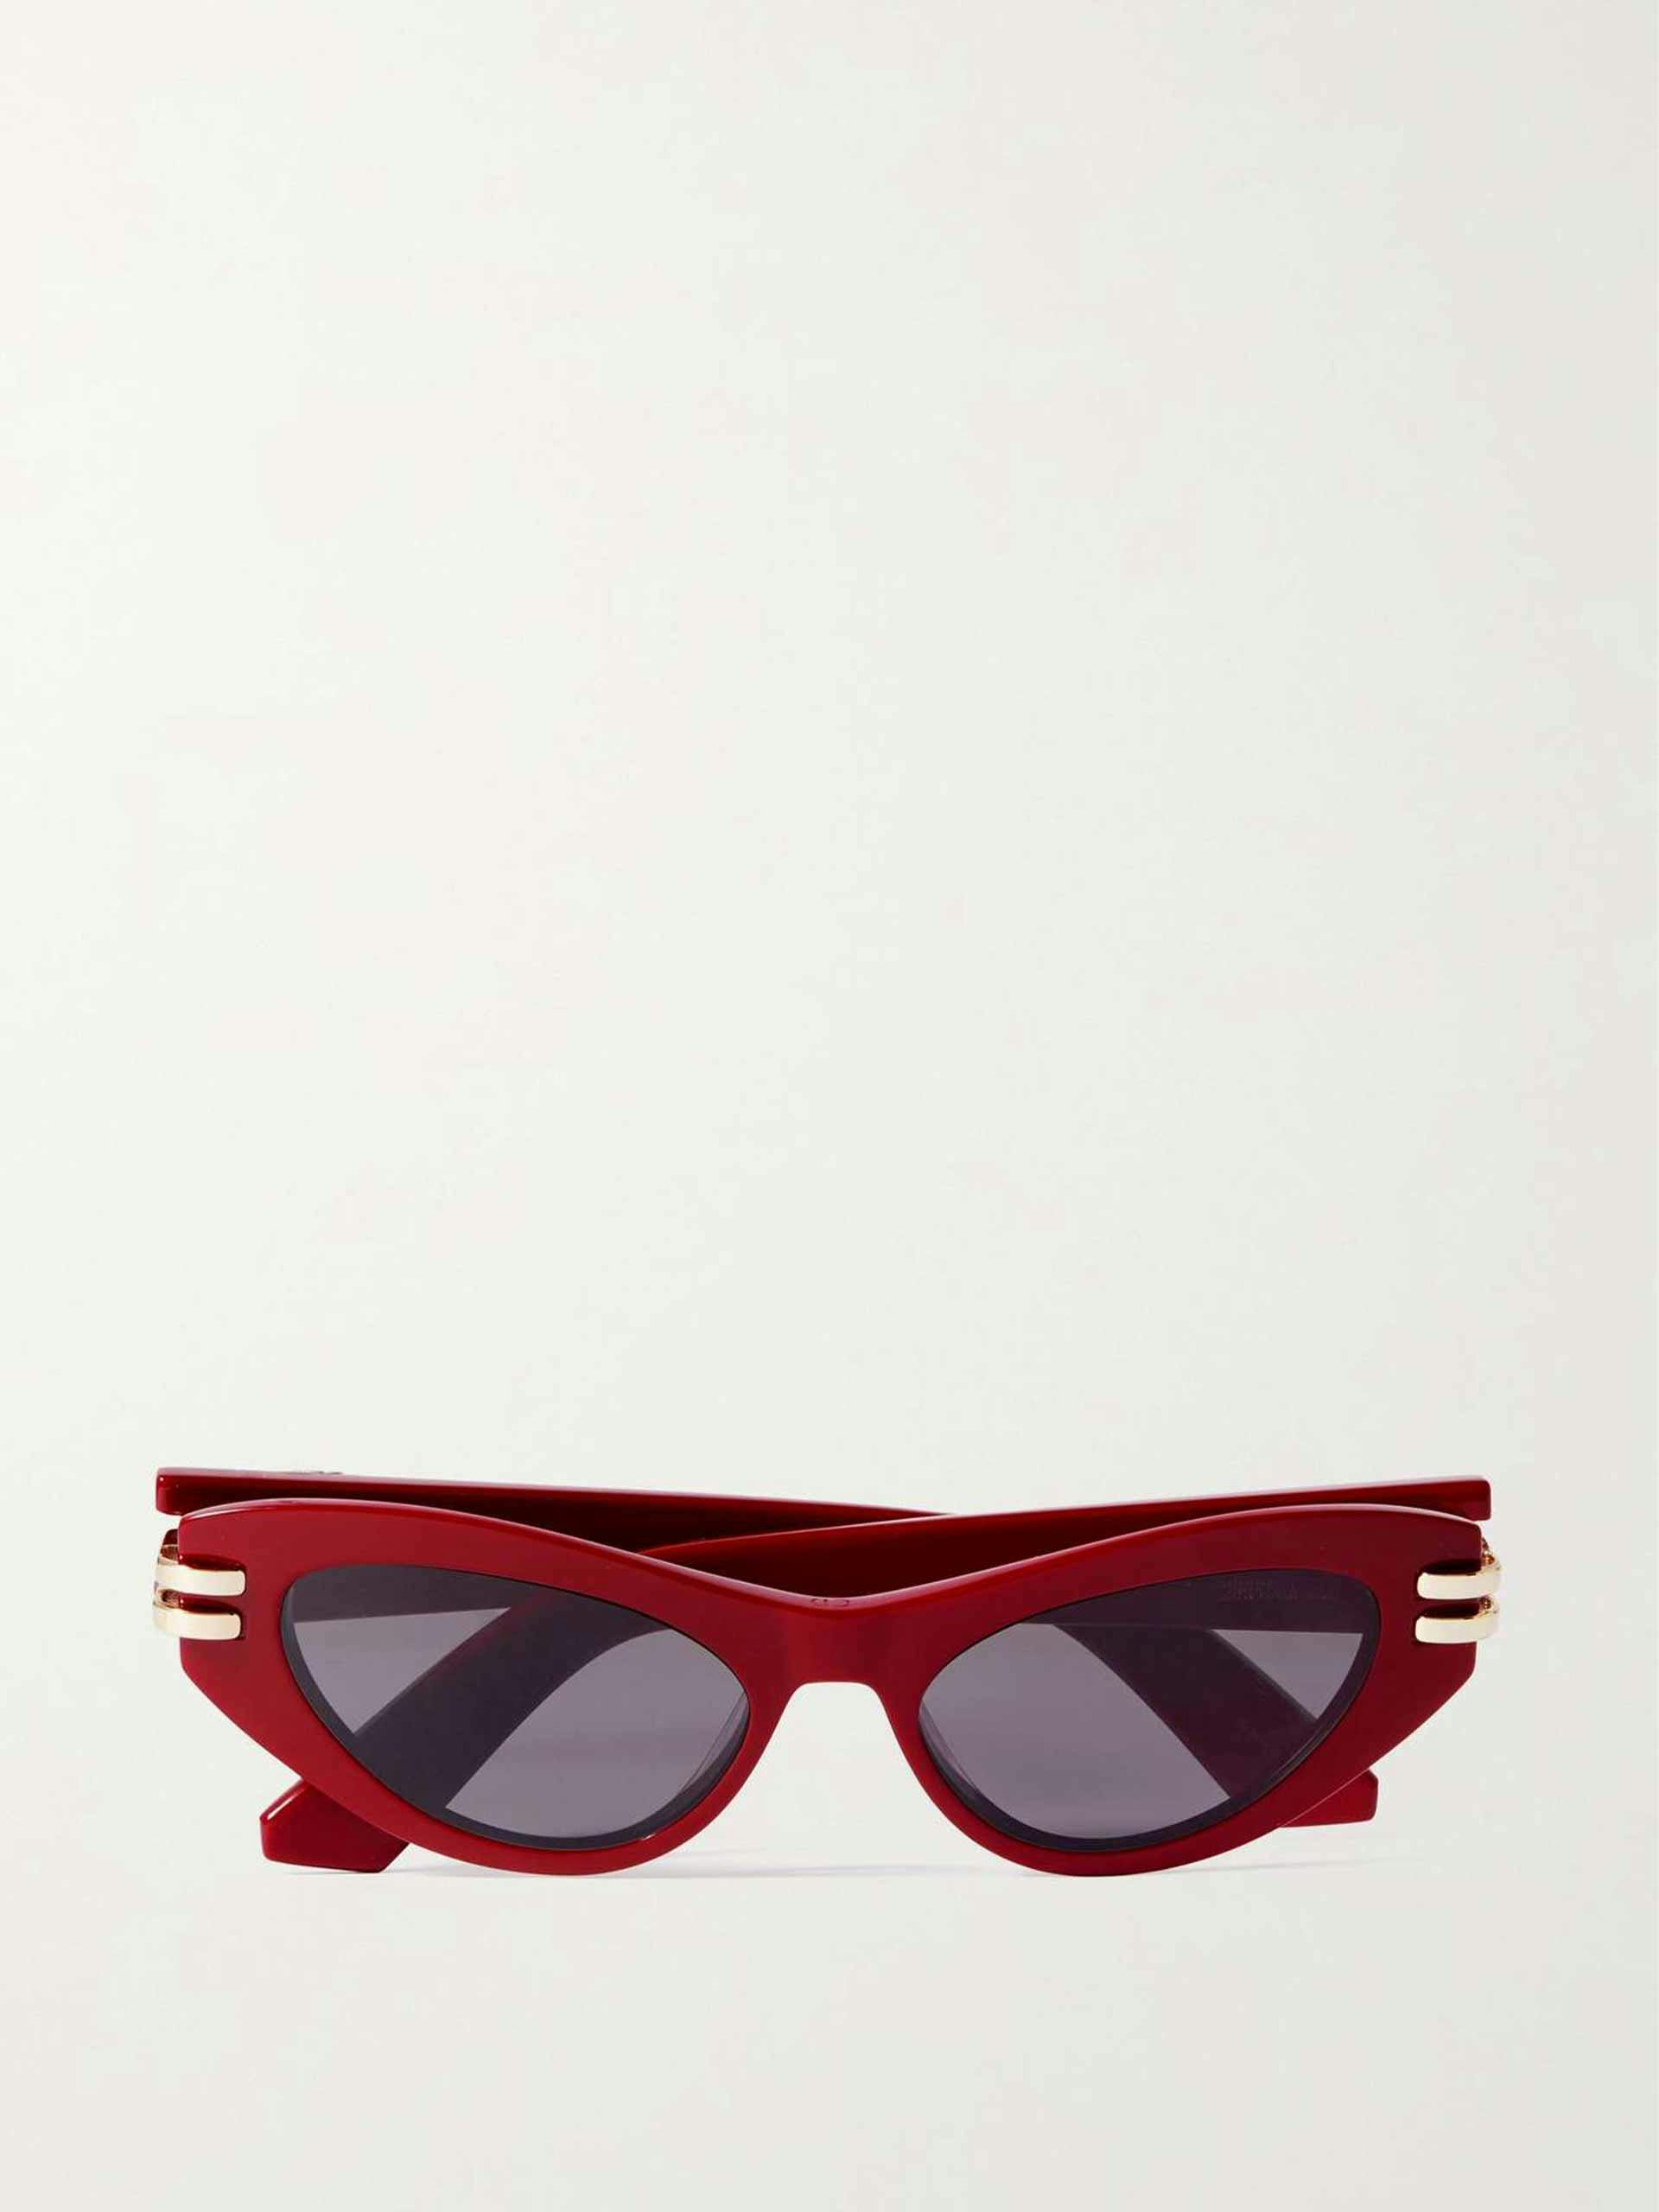 Red cat-eye sunglasses